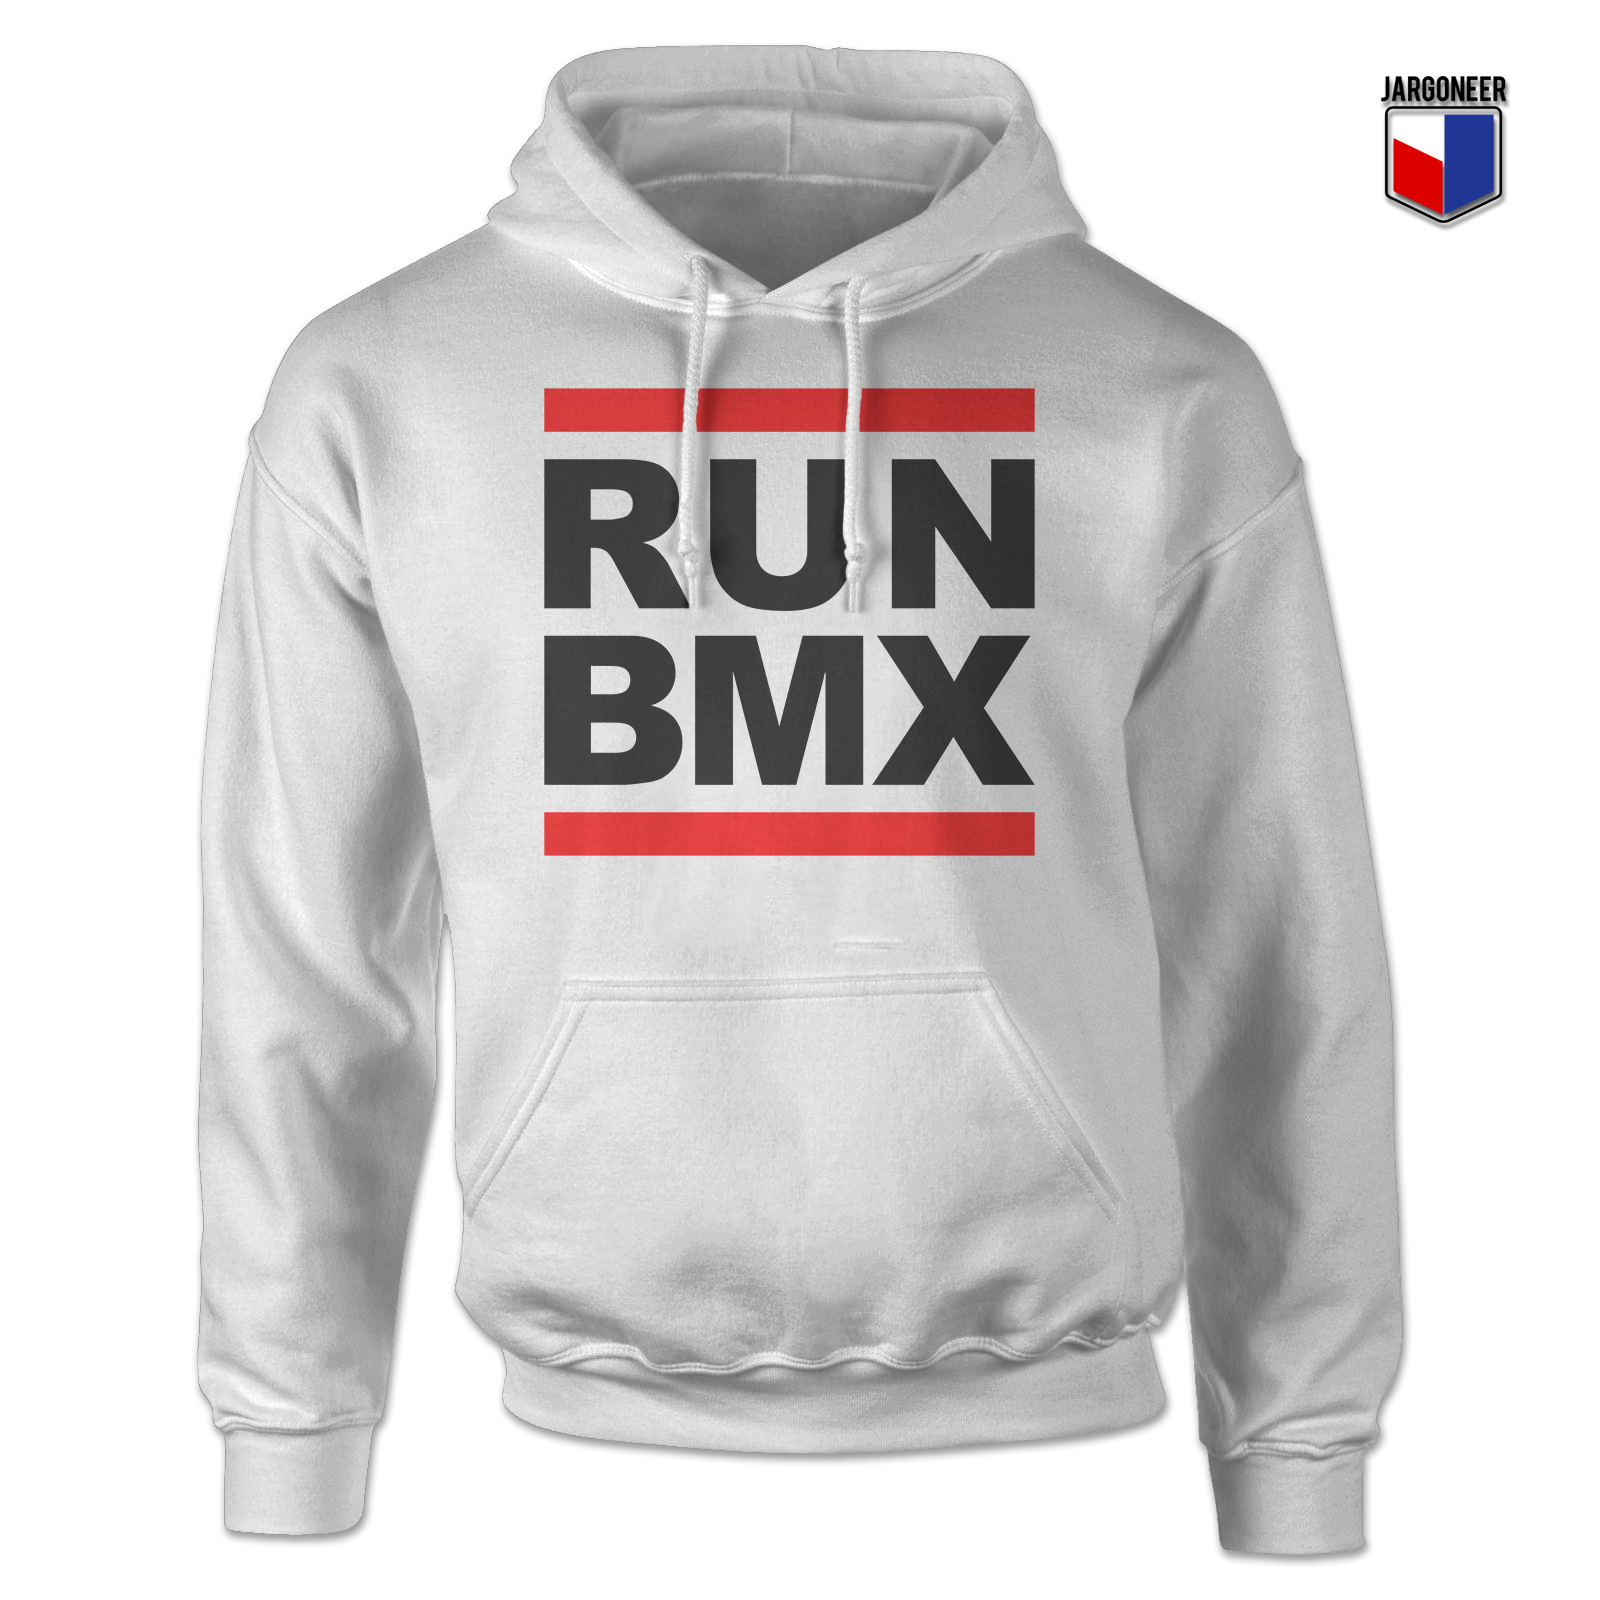 Run BMX White Hoody - Shop Unique Graphic Cool Shirt Designs